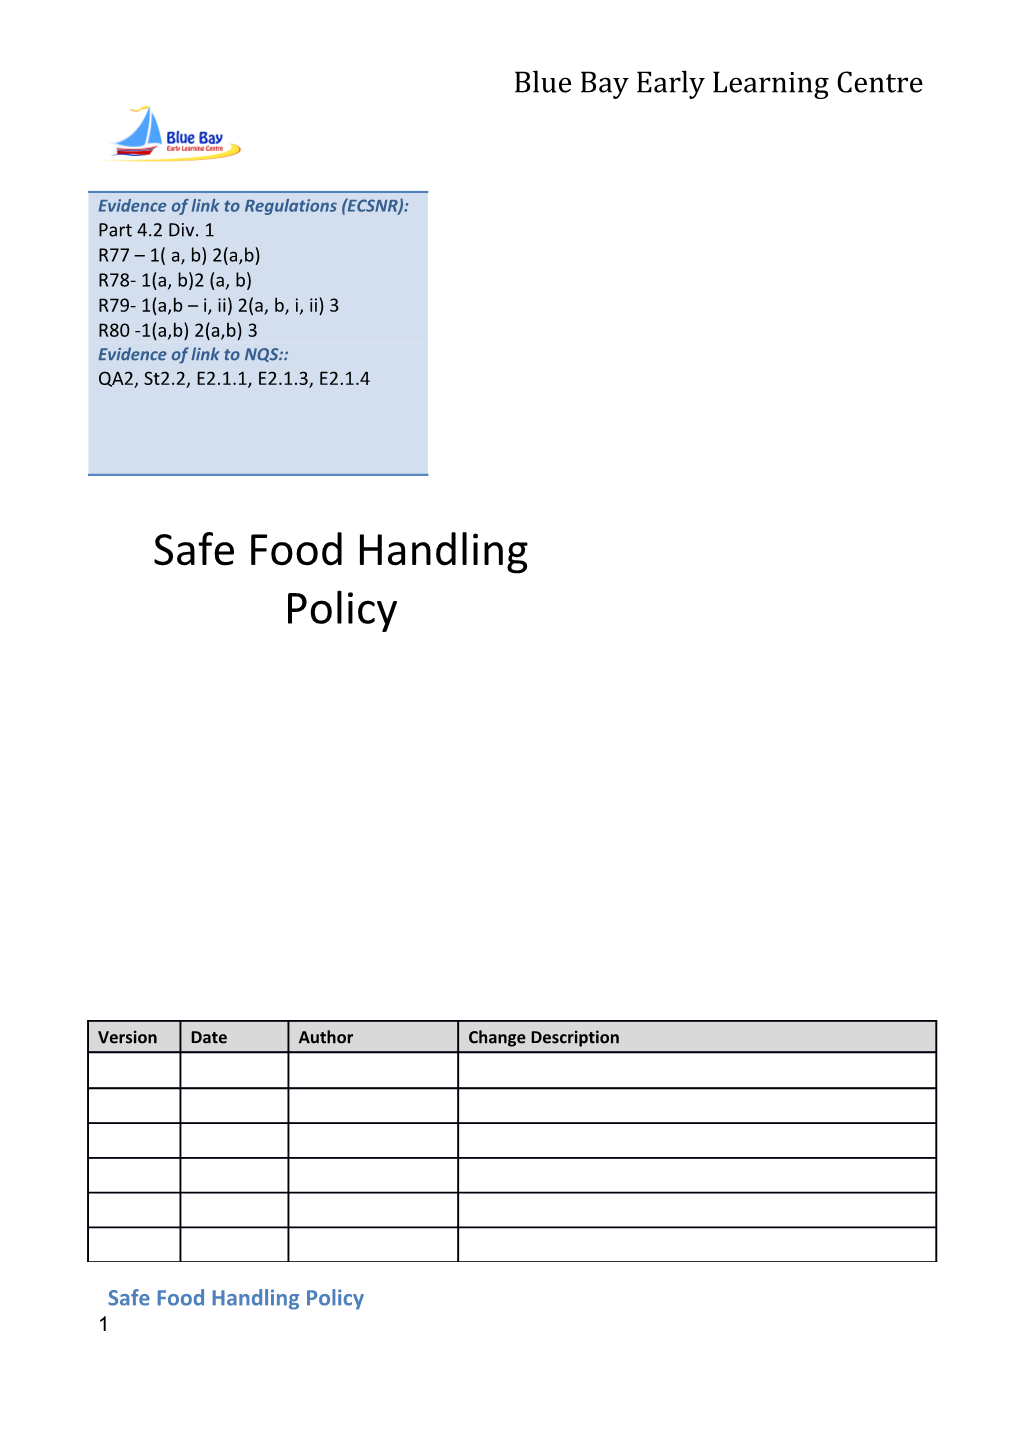 Safe Food Handling Policy